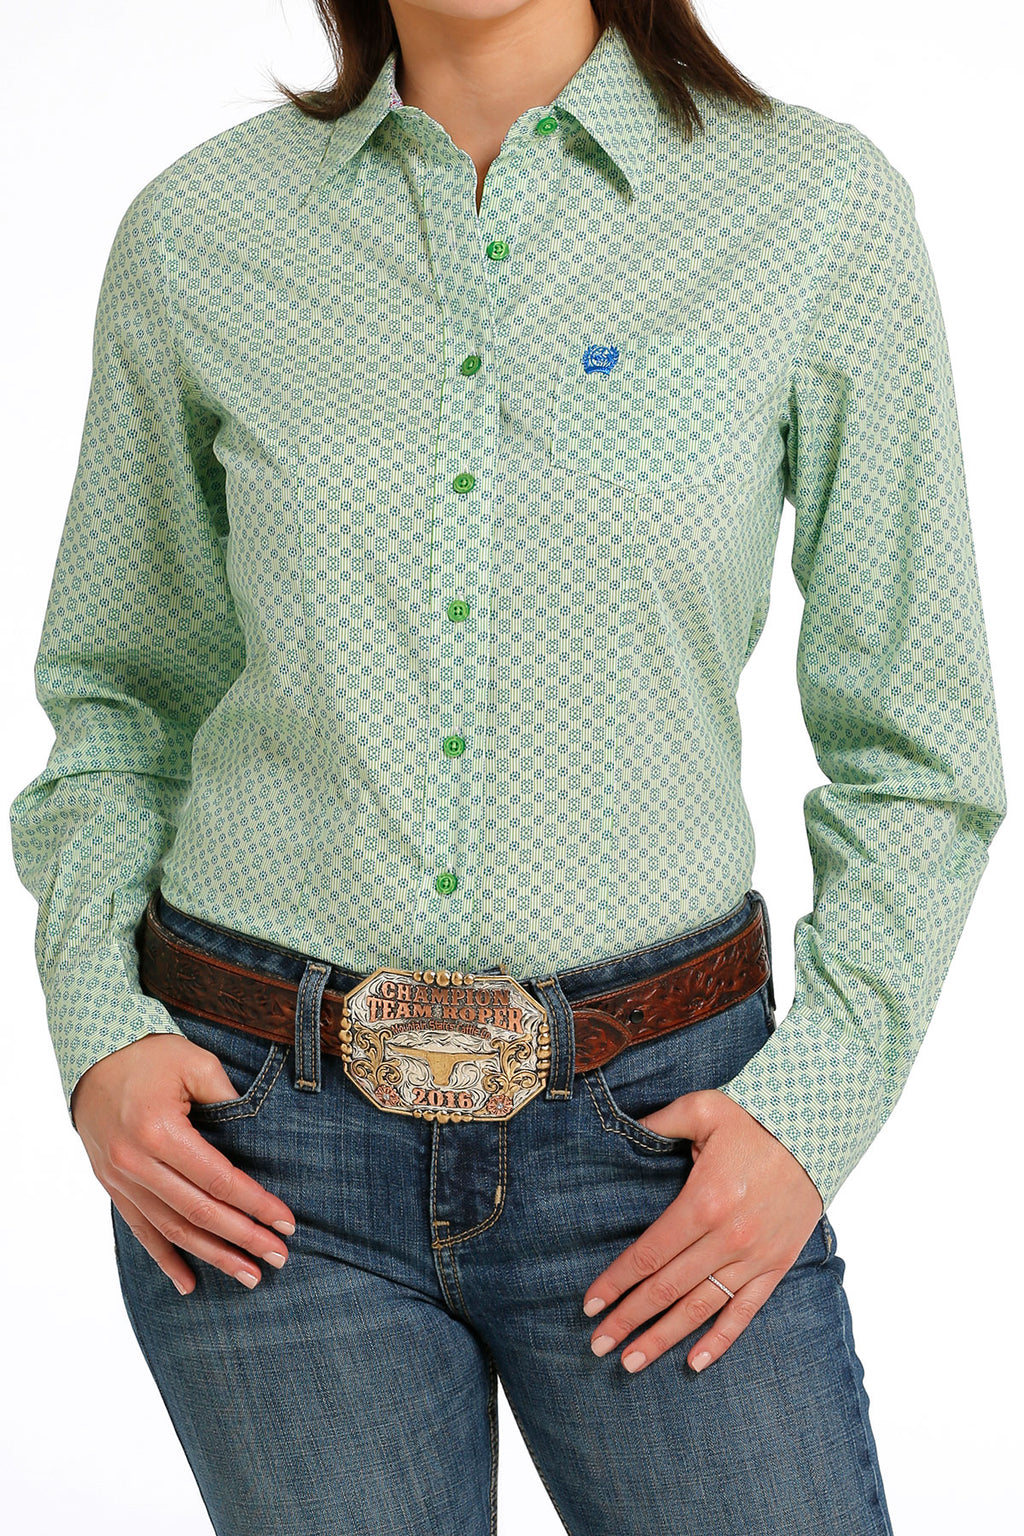 CINCH Women's Green and Blue Button-Down Western Shirt